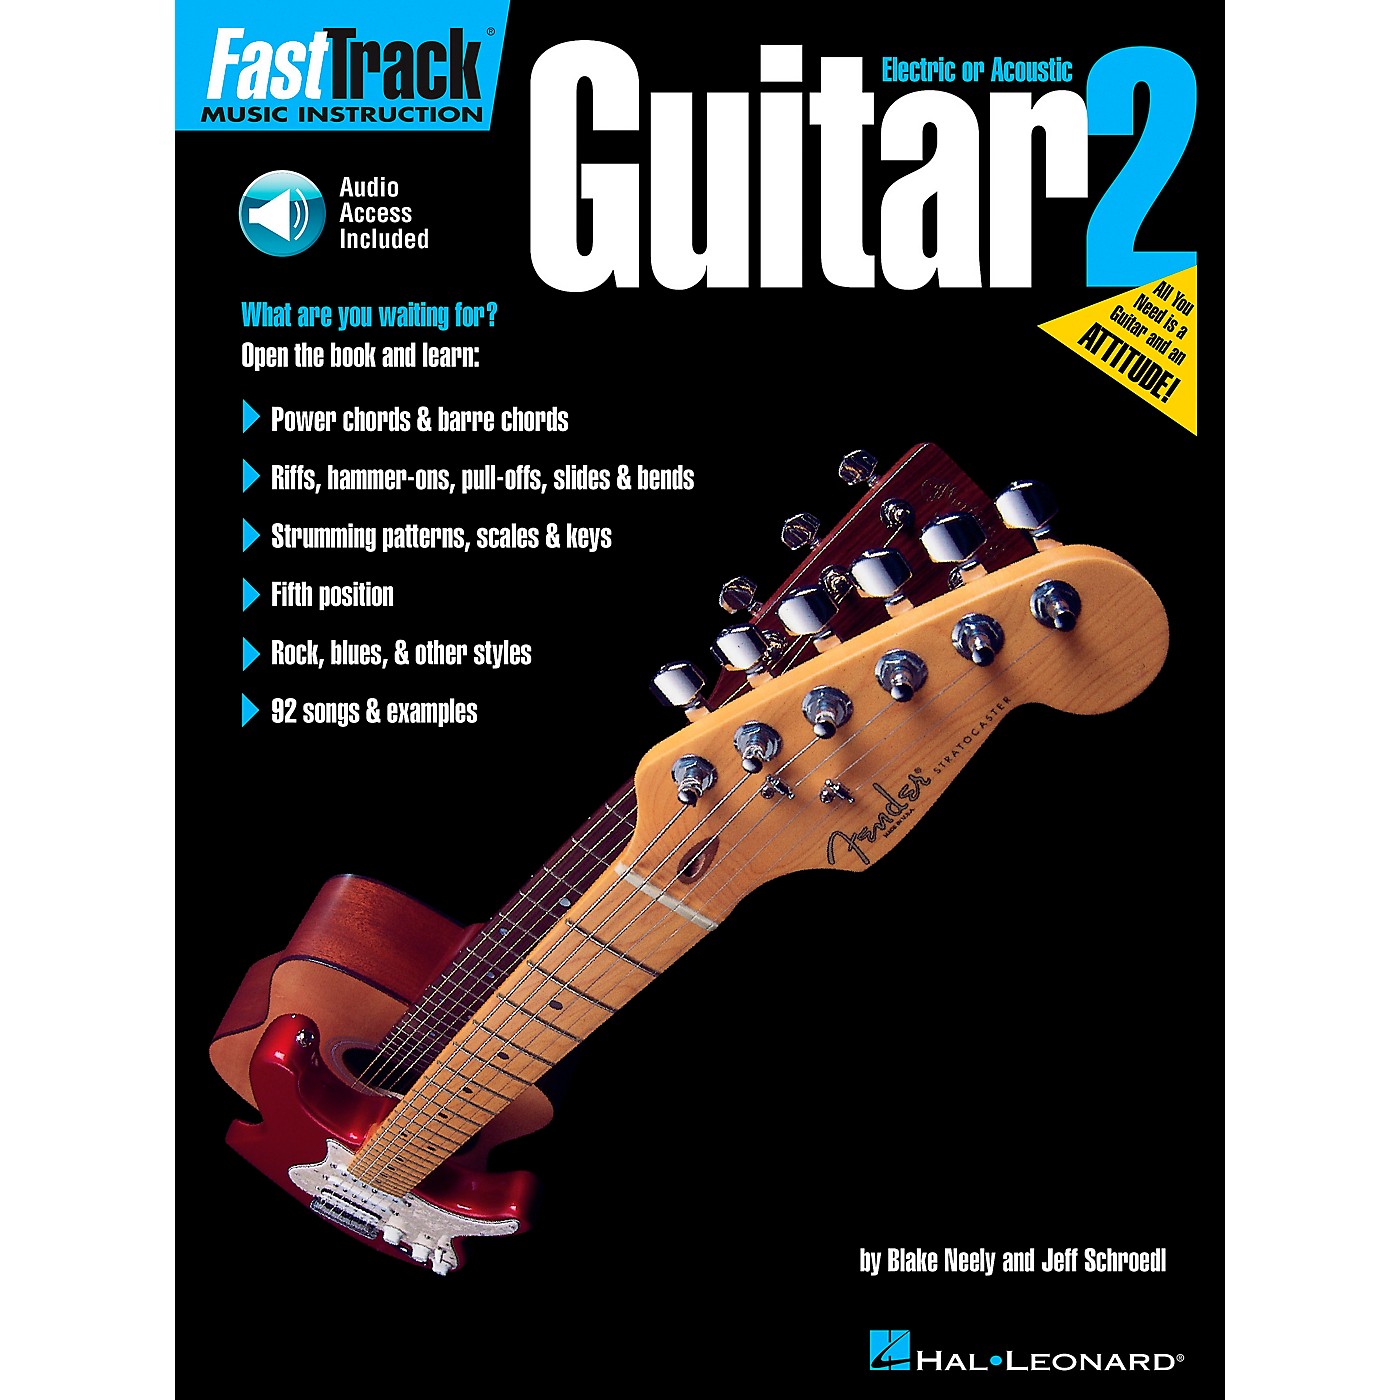 Hal Leonard FastTrack Guitar Method Book 2 (Book/Audio Online) thumbnail